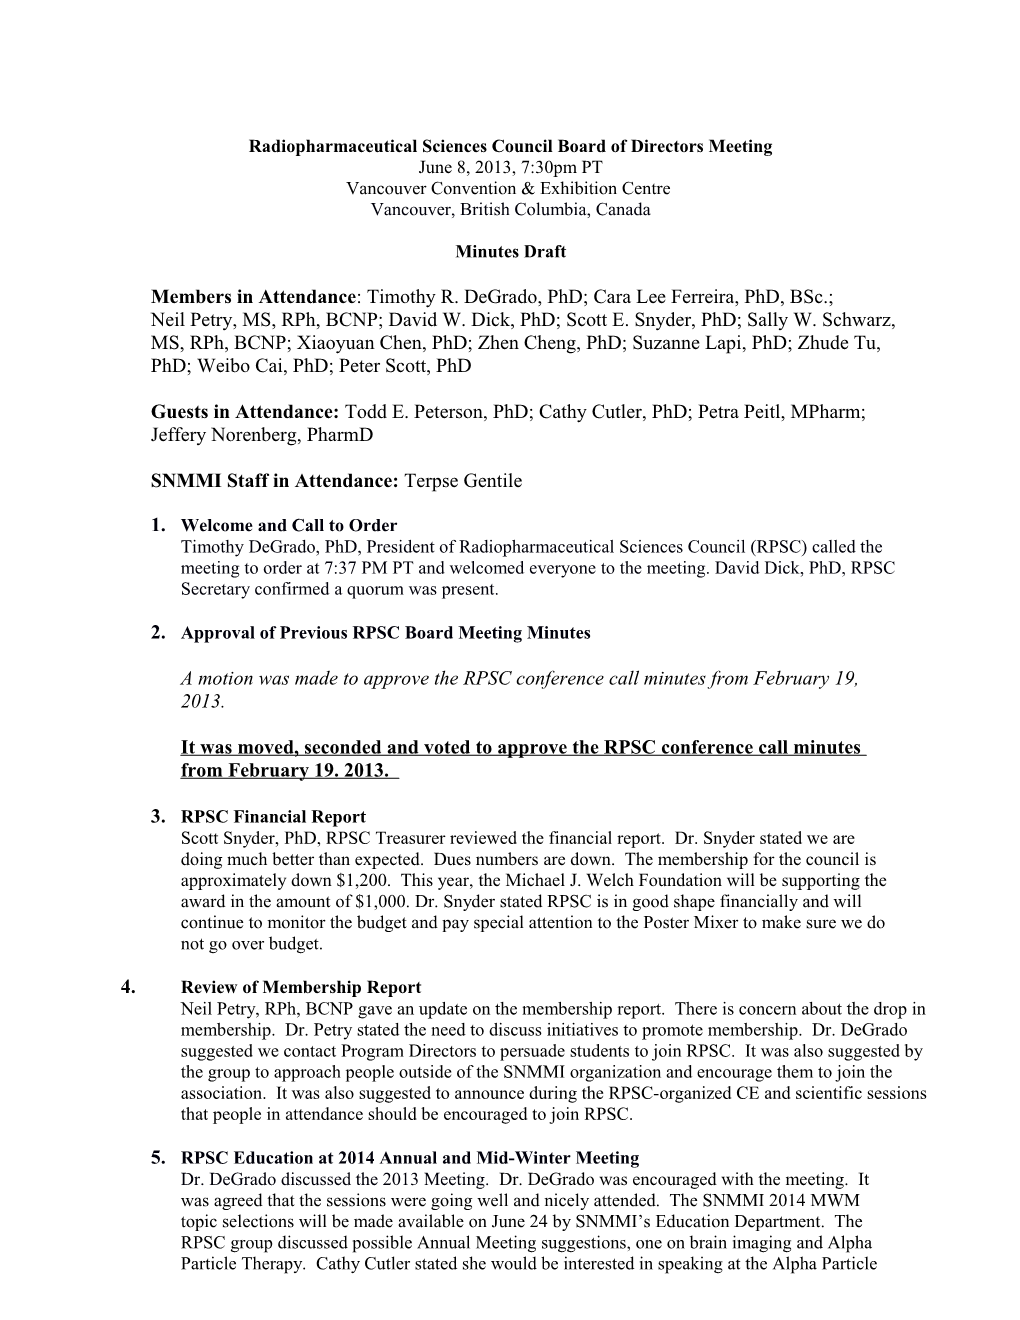 Agenda Items for RPSC Interim Board Meeting March 13, 2004; 8:30 Am 4:00 Pmrenaissance St